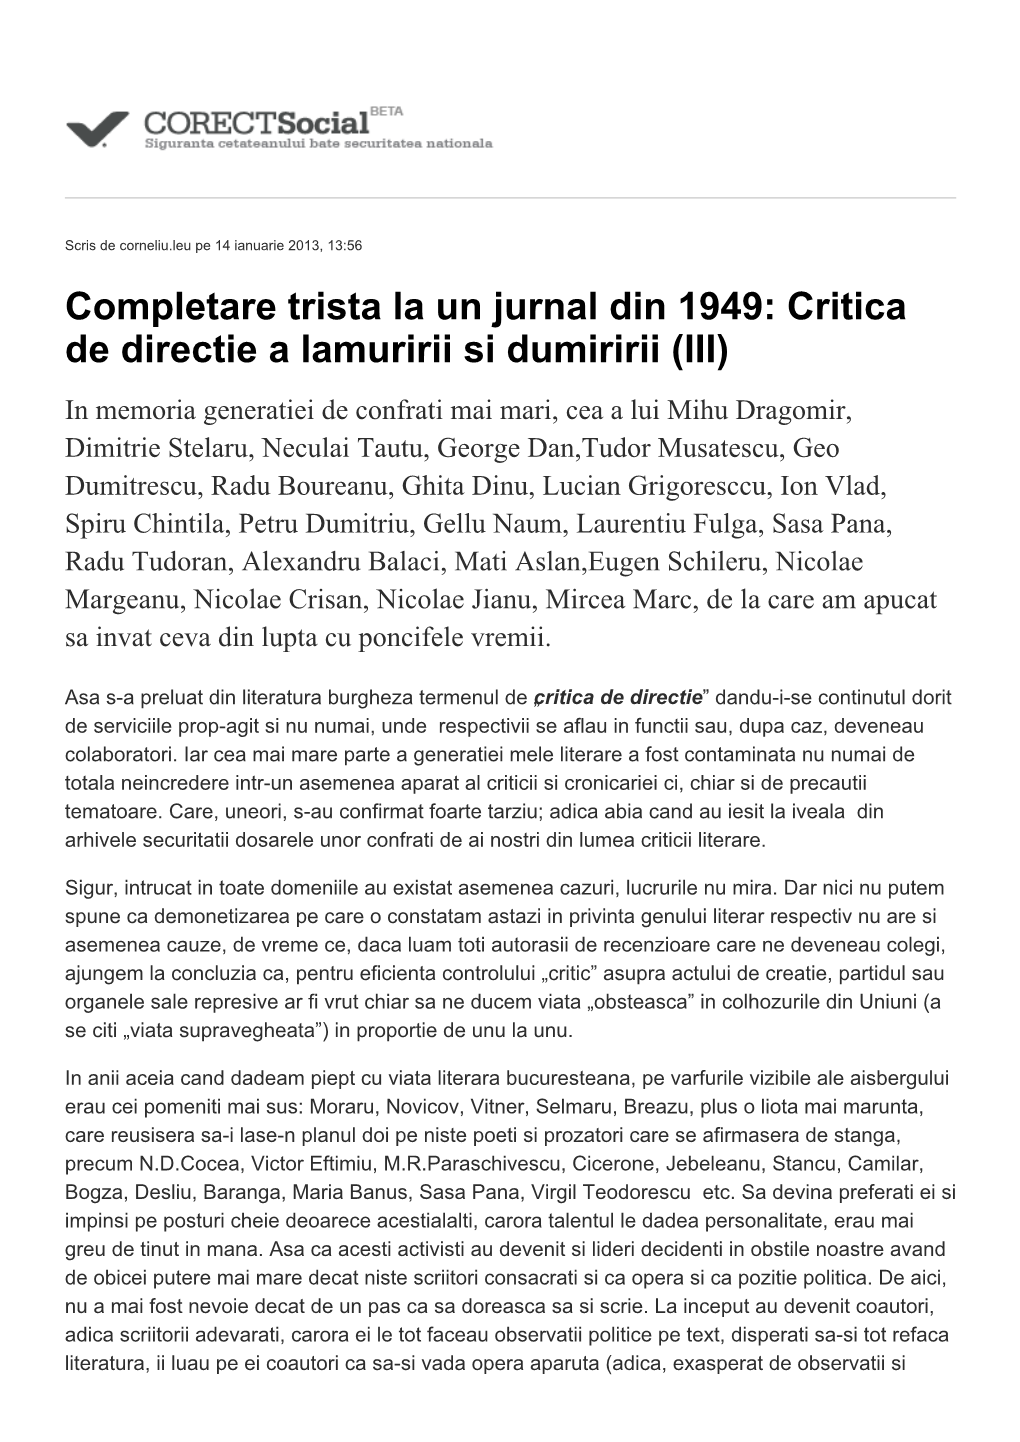 Completare Trista La Un Jurnal Din 1949: Critica De Directie A